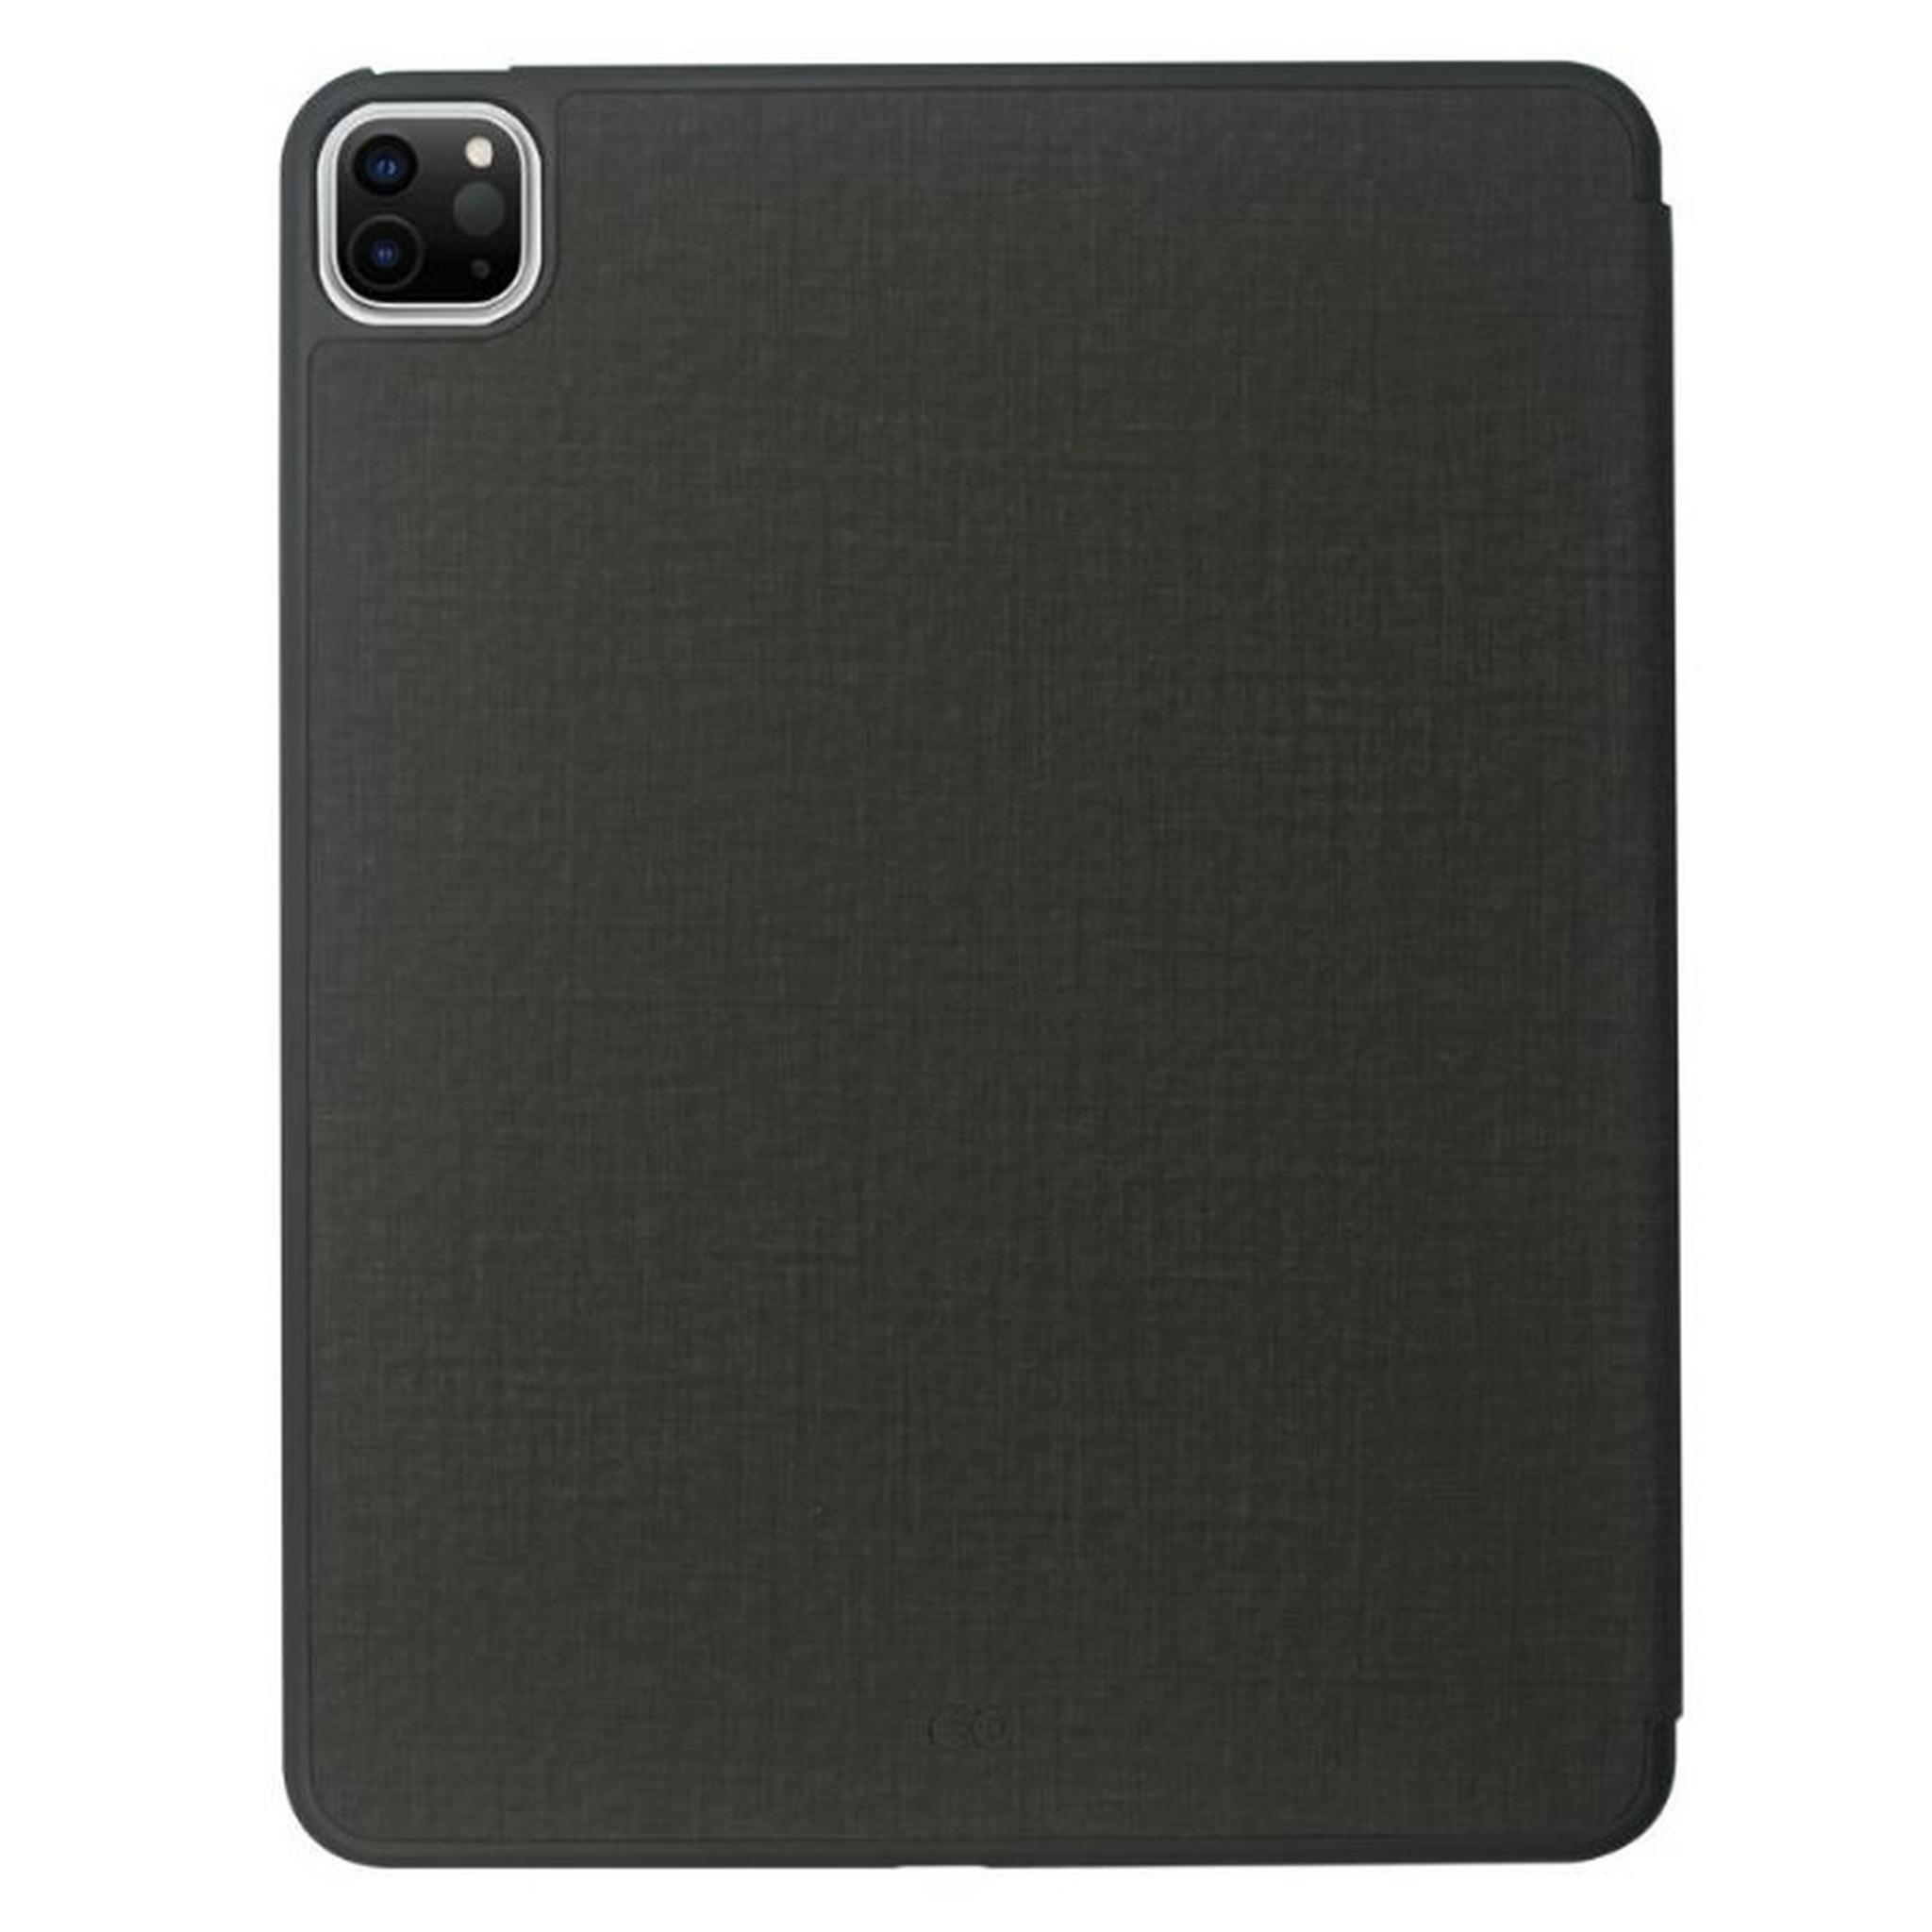 EQ Mebric Case For iPad Pro 11 inch - Black